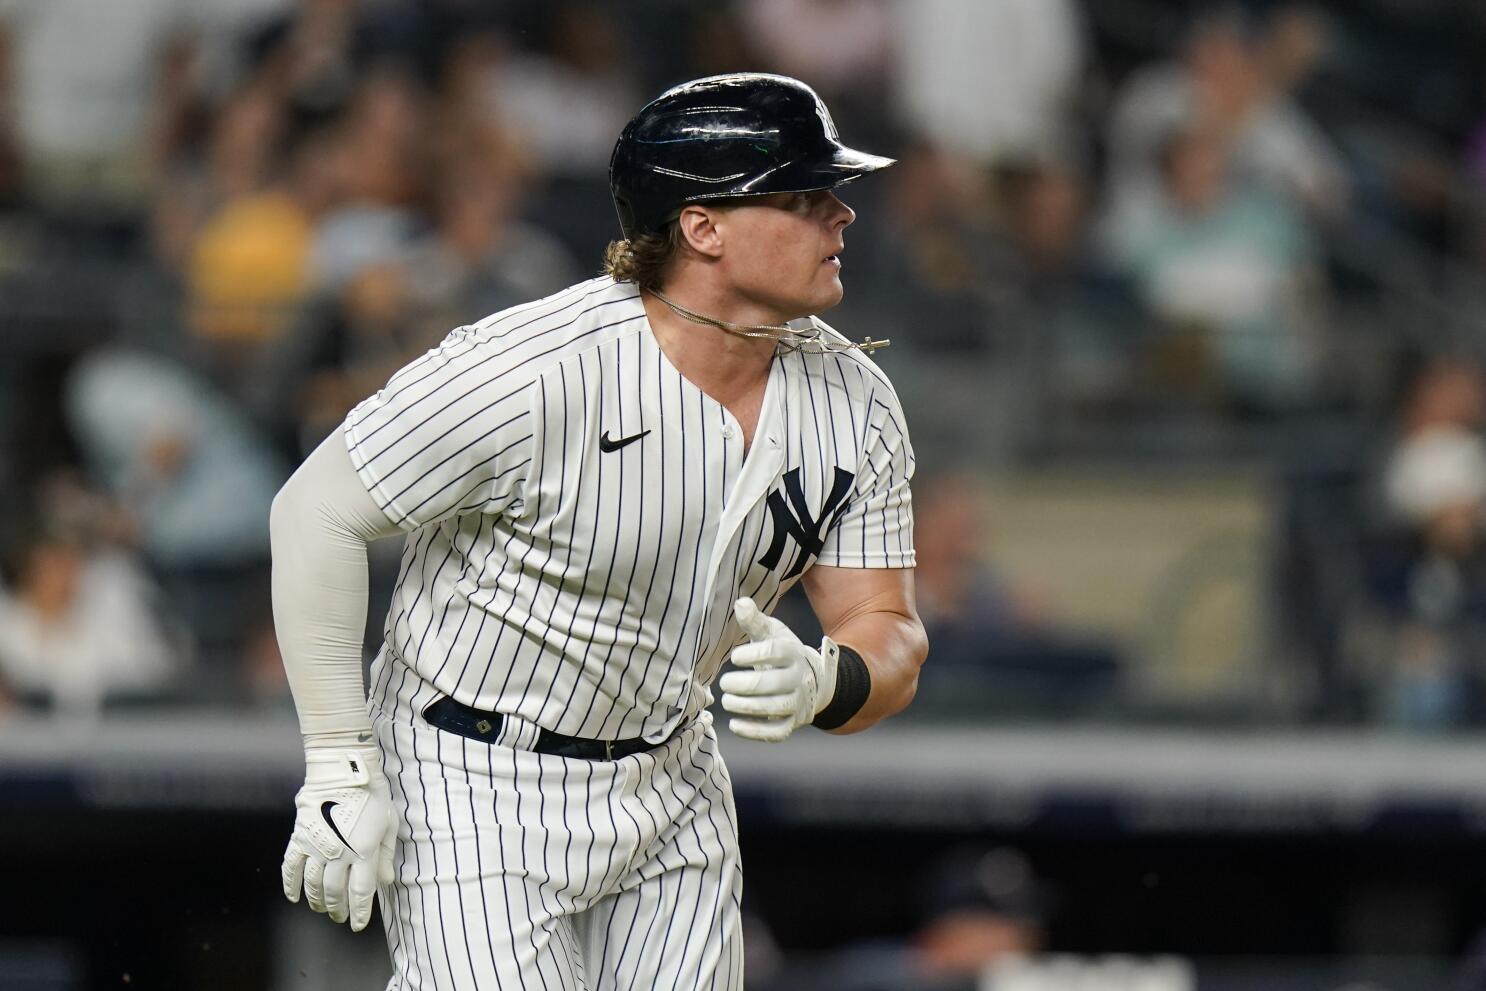 Luke Voit hits 2 home runs to help New York Yankees past Orioles